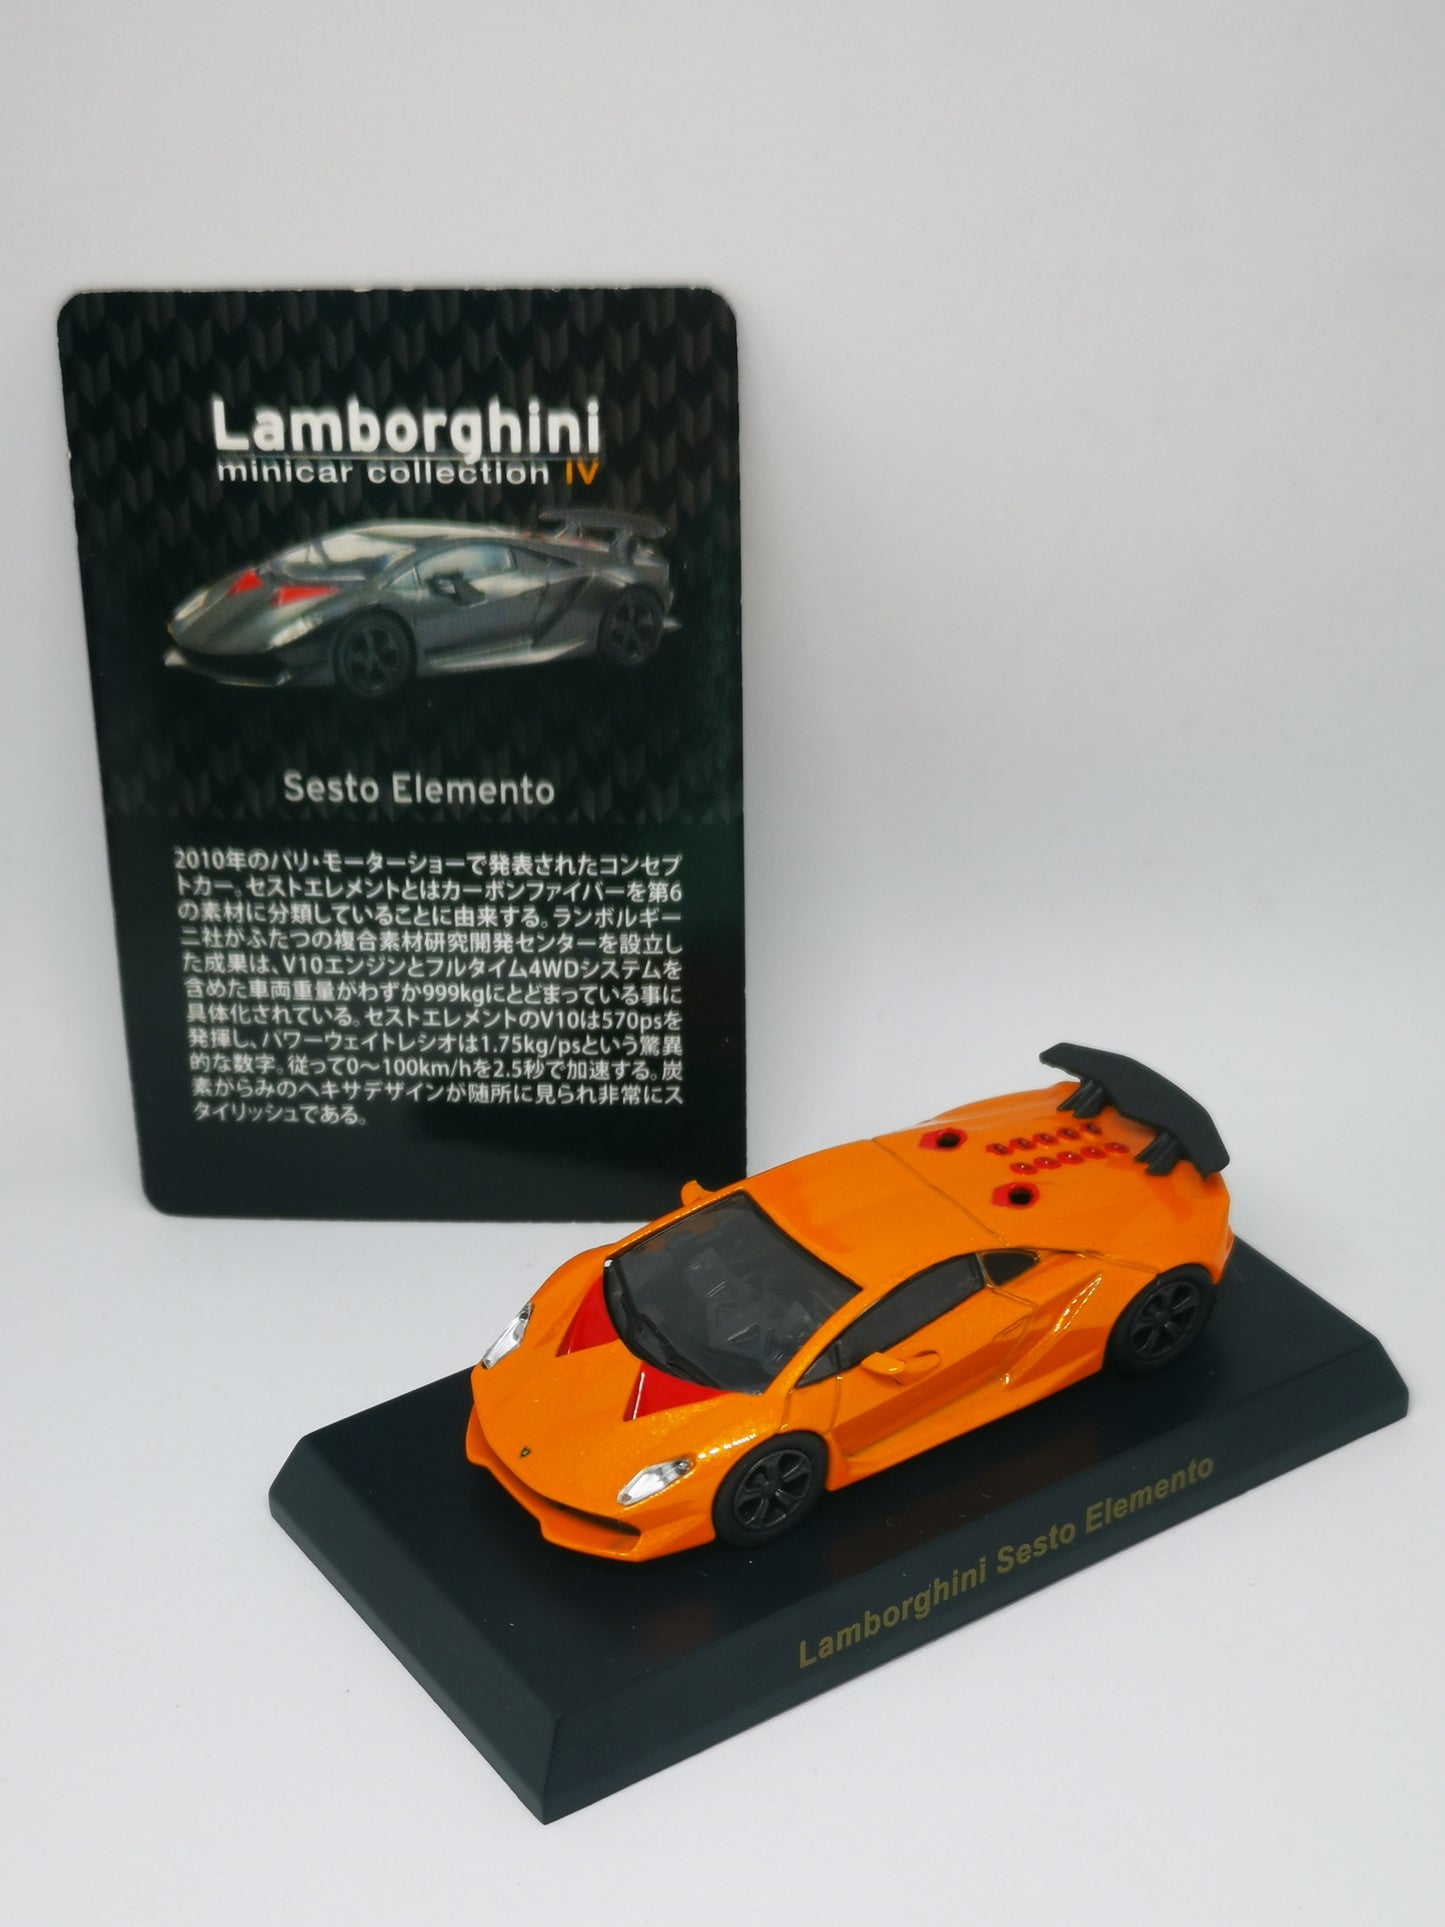 Kyosho 1:64 Scale Minicar Collection Lamborghini IV Lamborghini Sesto Elemento